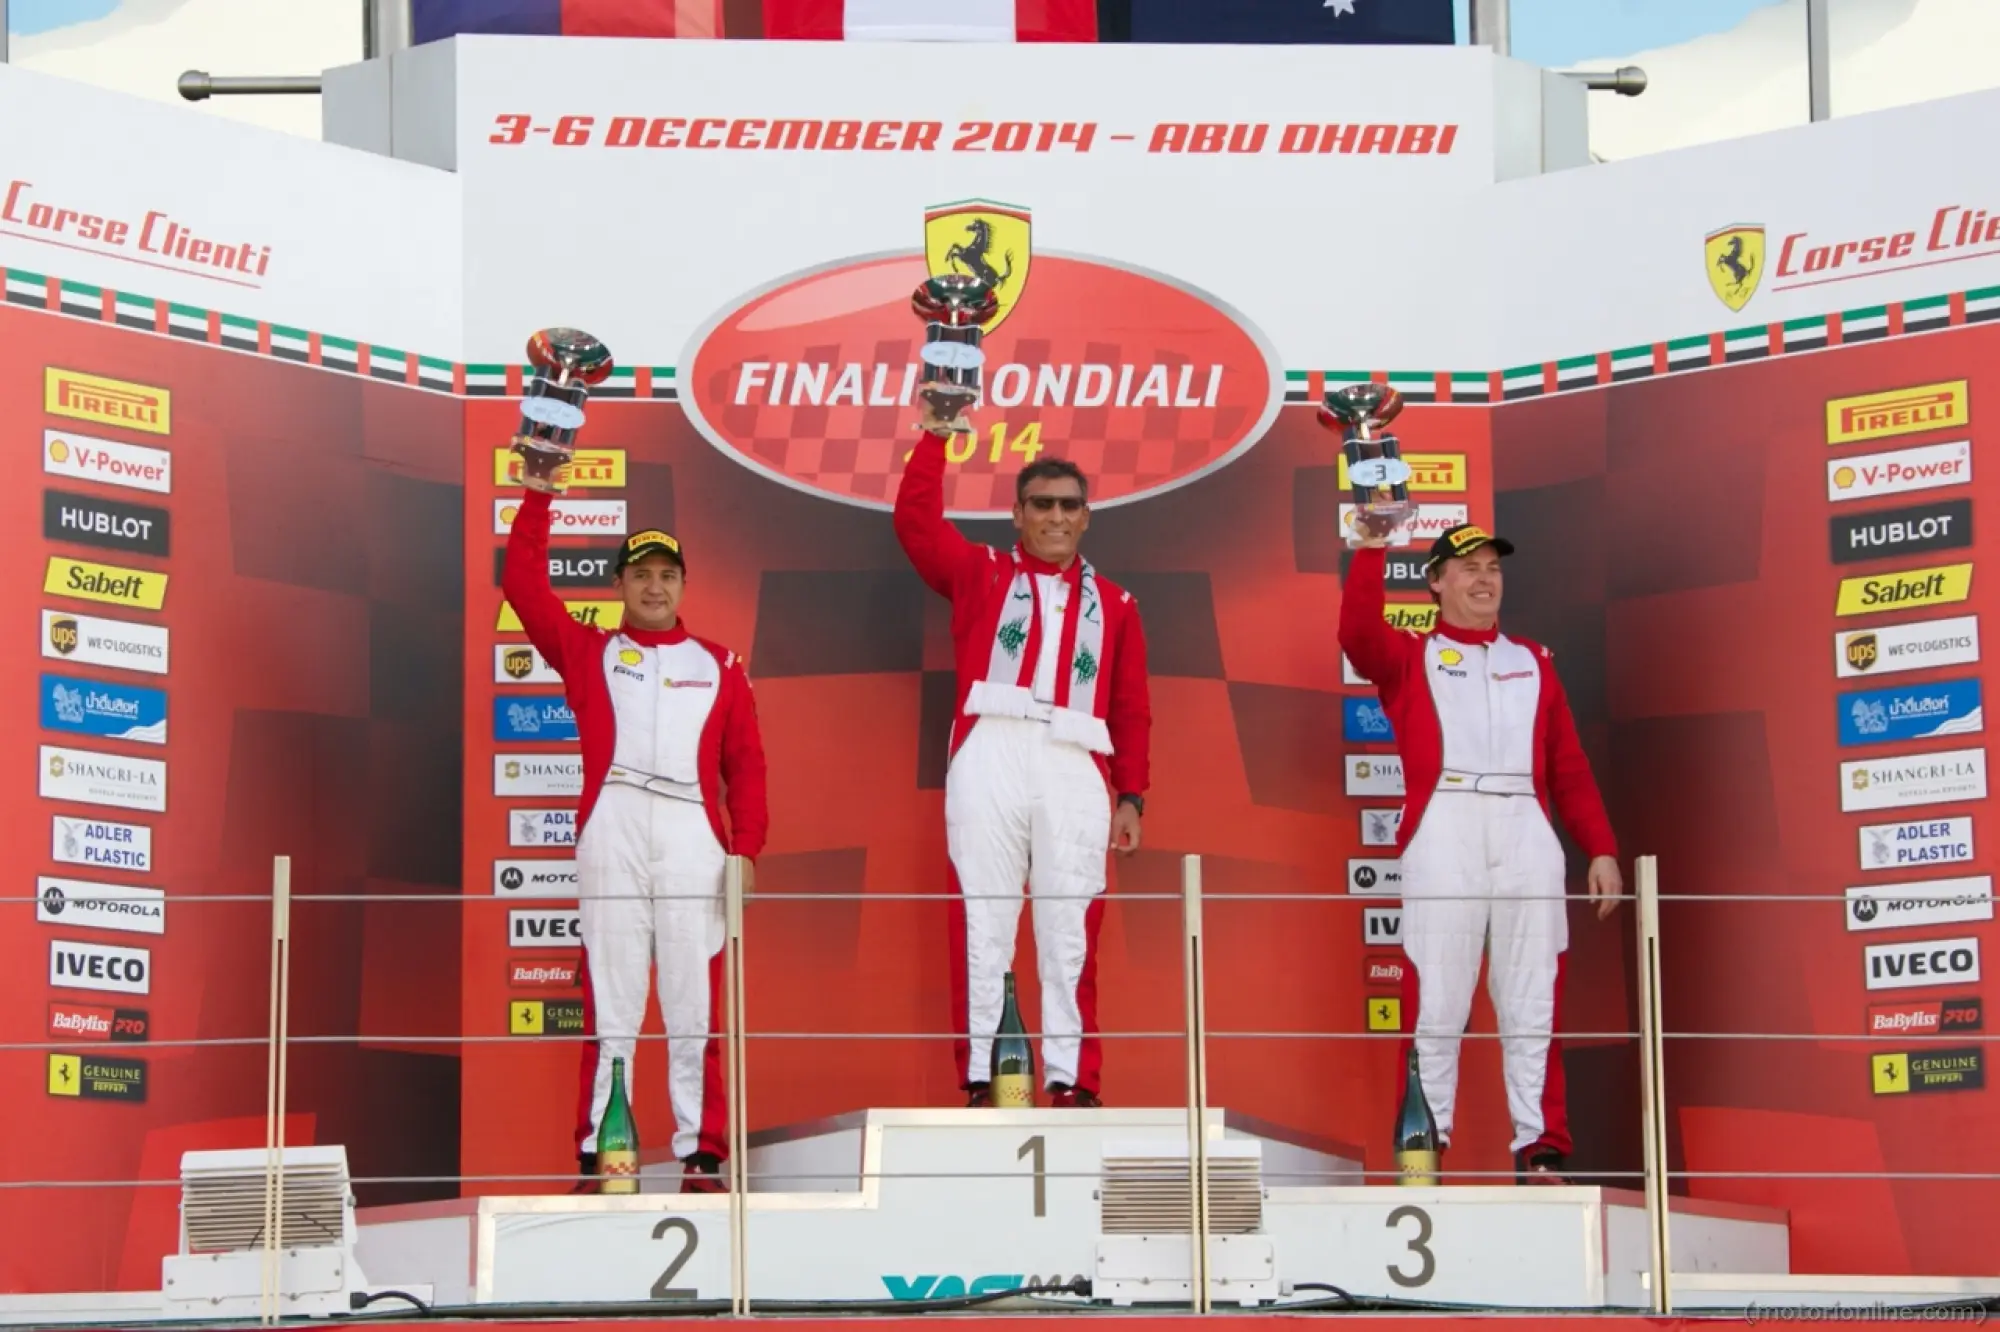 Ferrari Finali Mondiali 2014 - 135